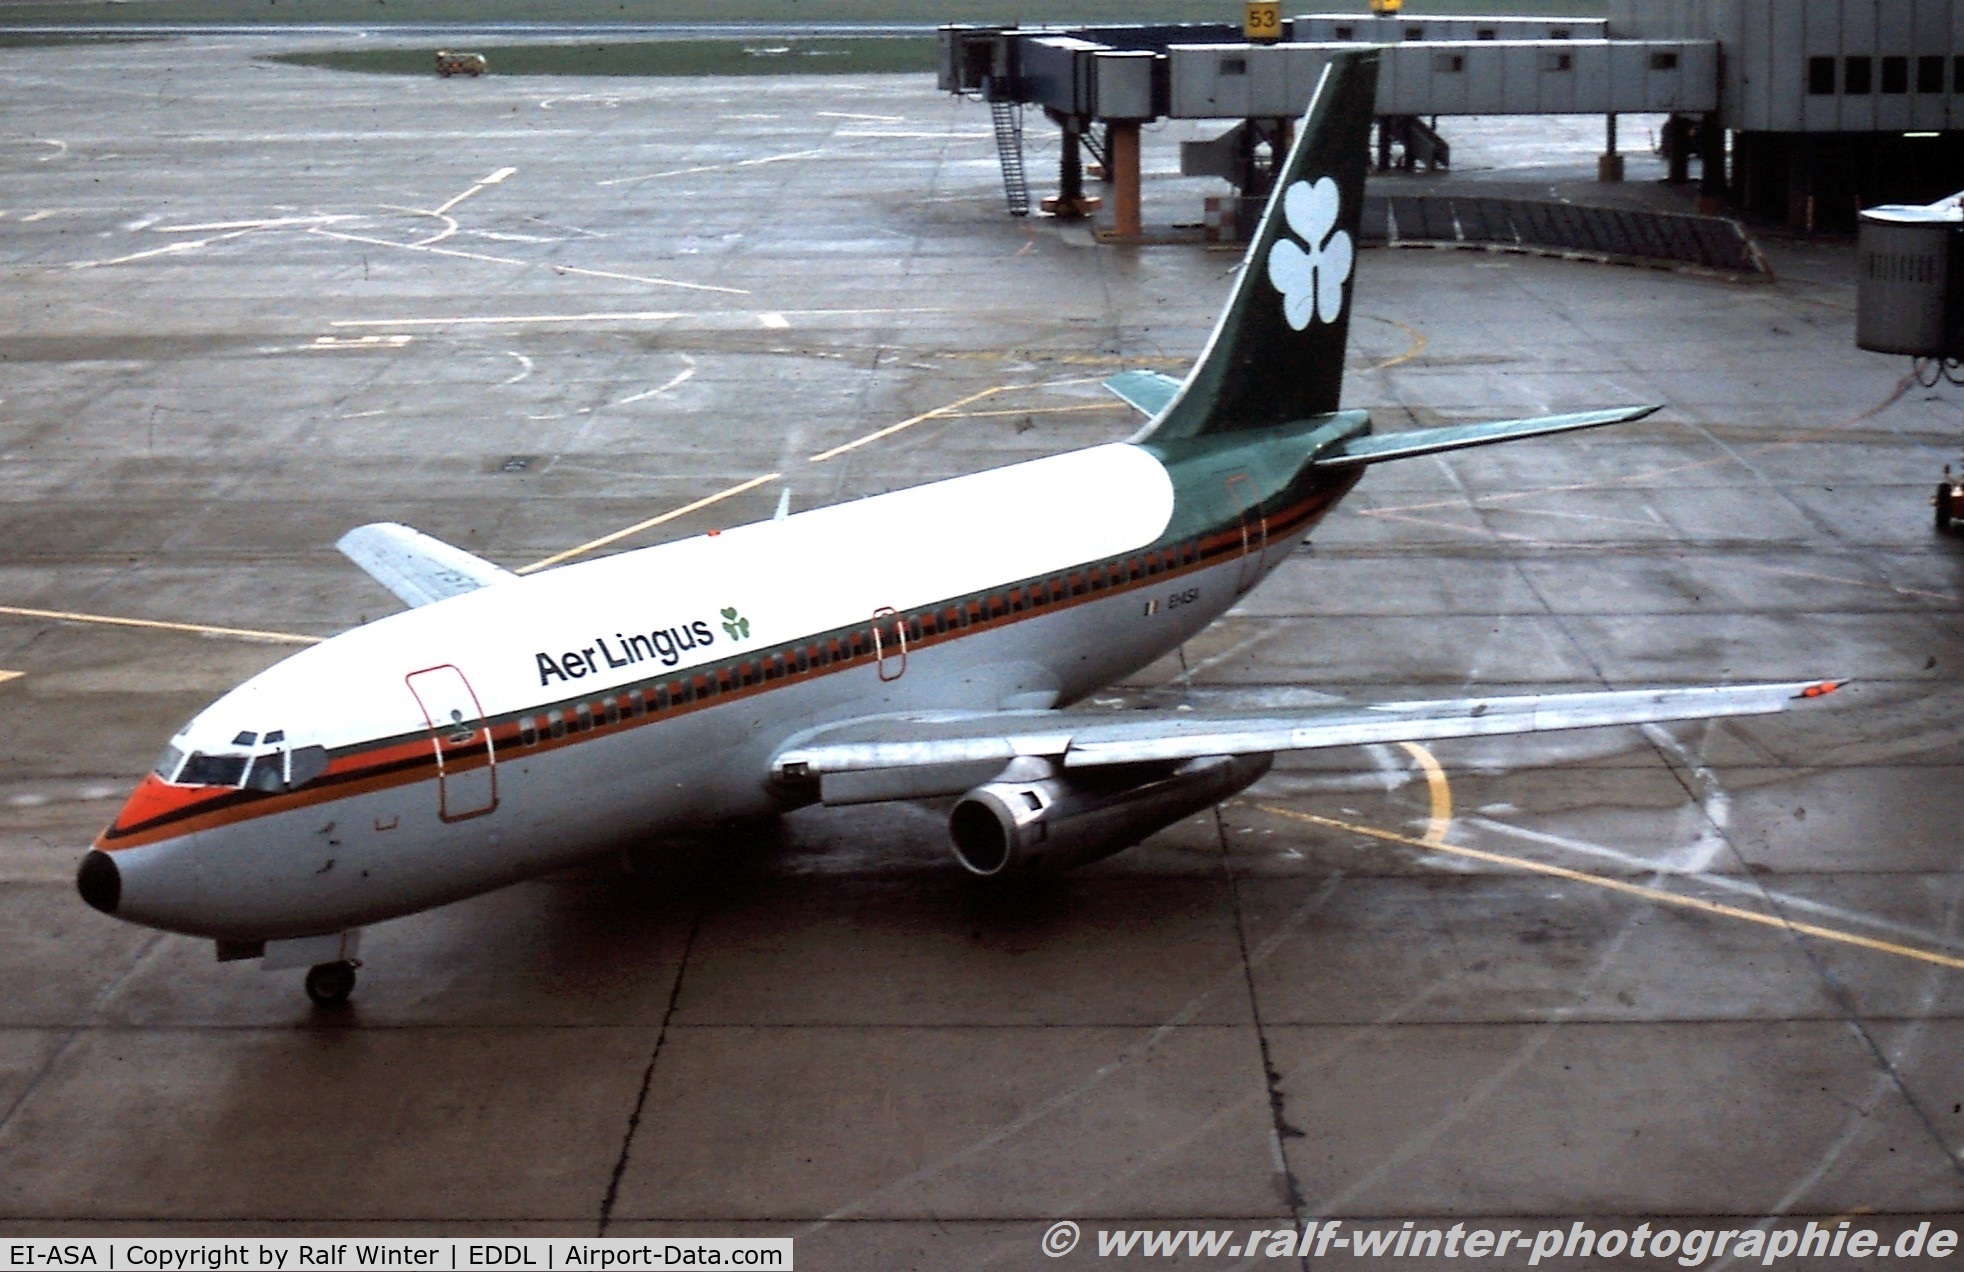 EI-ASA, 1969 Boeing 737-248 C/N 19424, Boeing 737-248 - Aer Lingus 'St. Jarlath' - 19424 - EI-ASA - 1980 - DUS